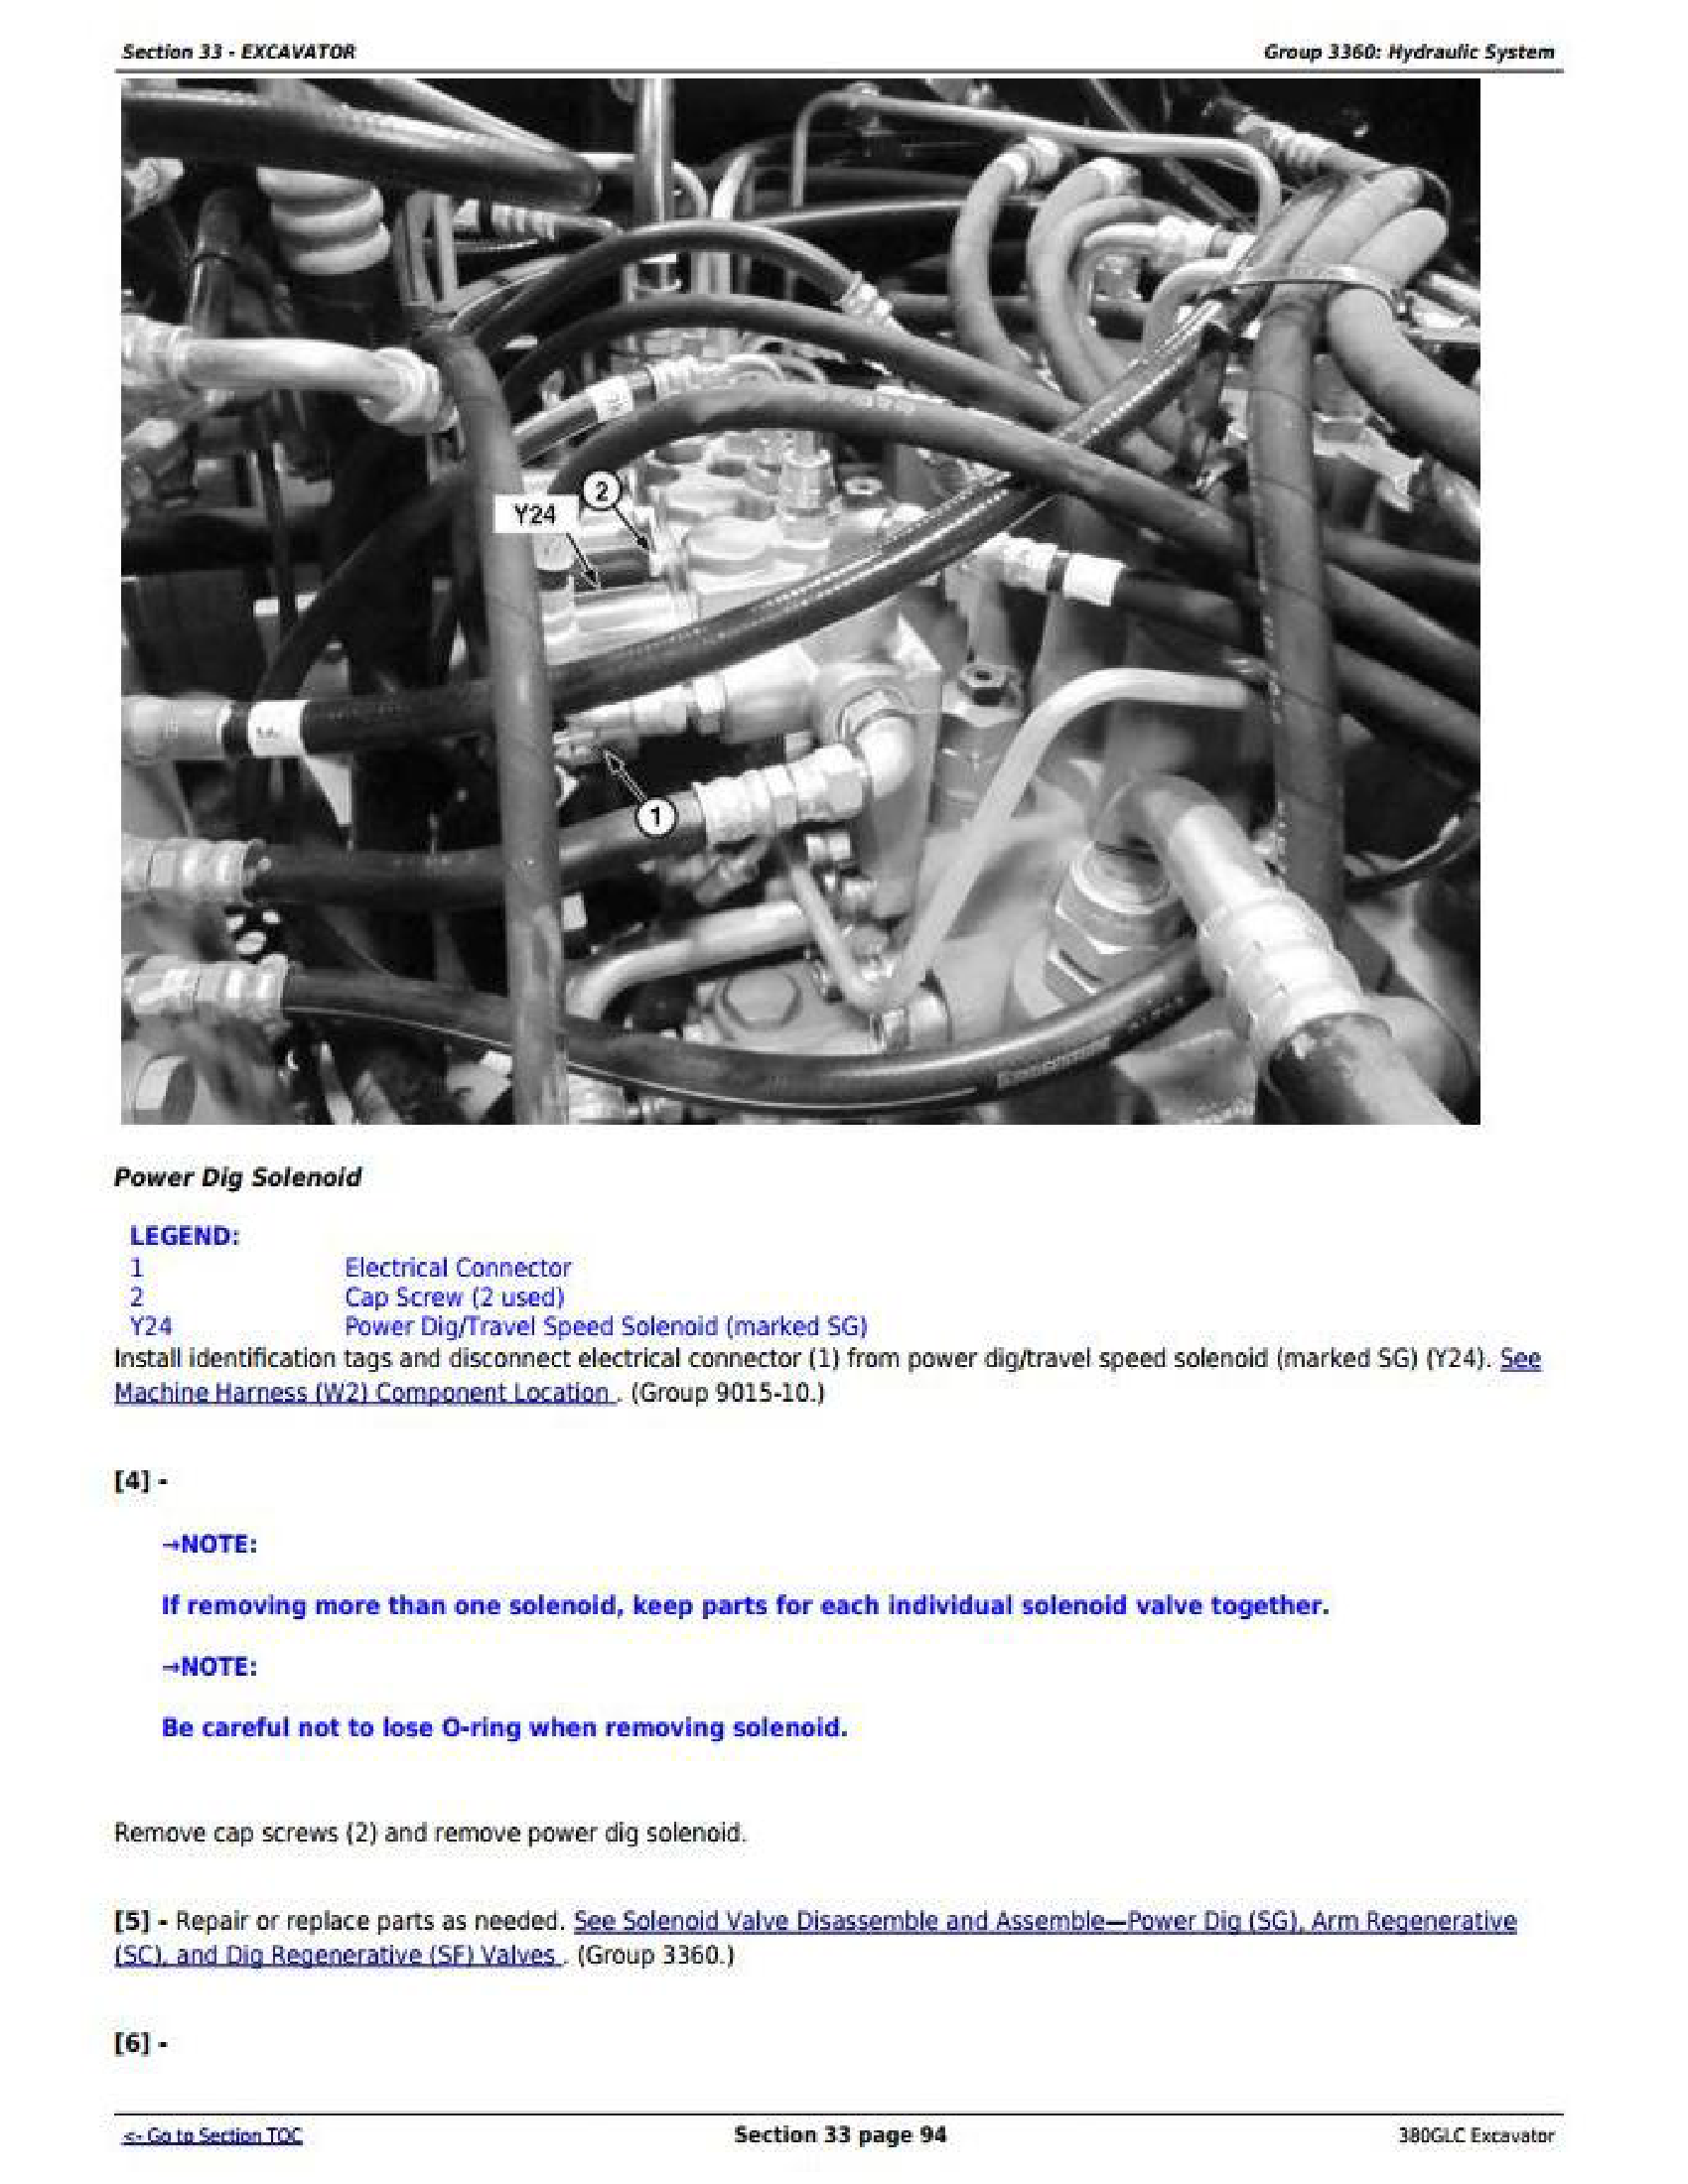 John Deere 380GLC manual pdf